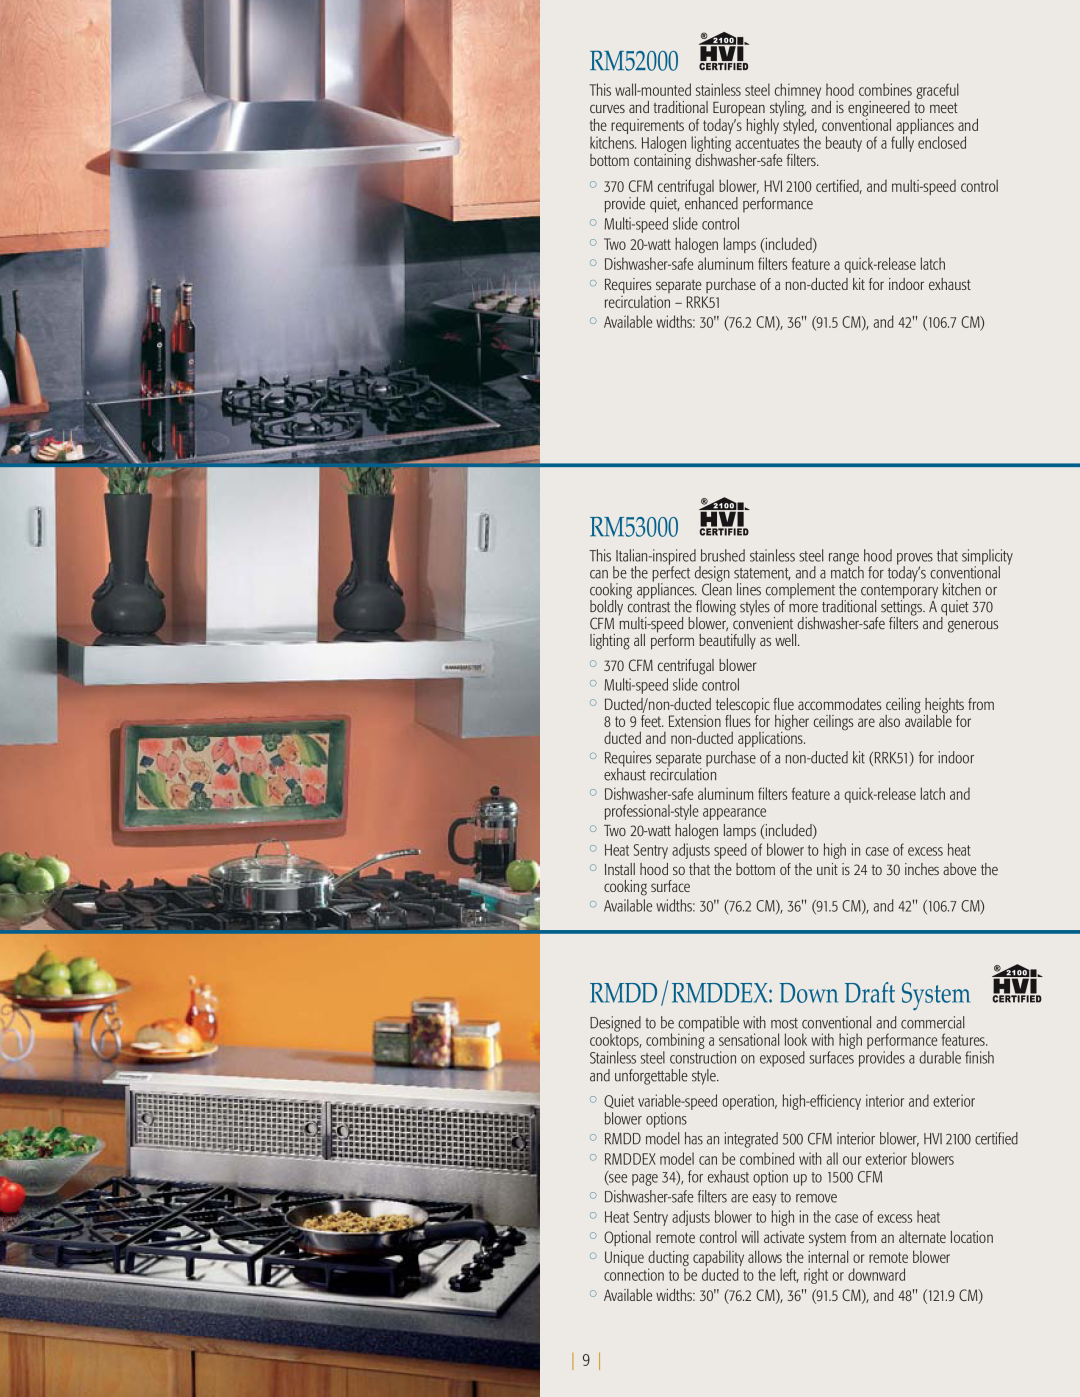 NuTone kitchen ventilation manual RM52000, RM53000, RMDD/RMDDEX Down Draft System 